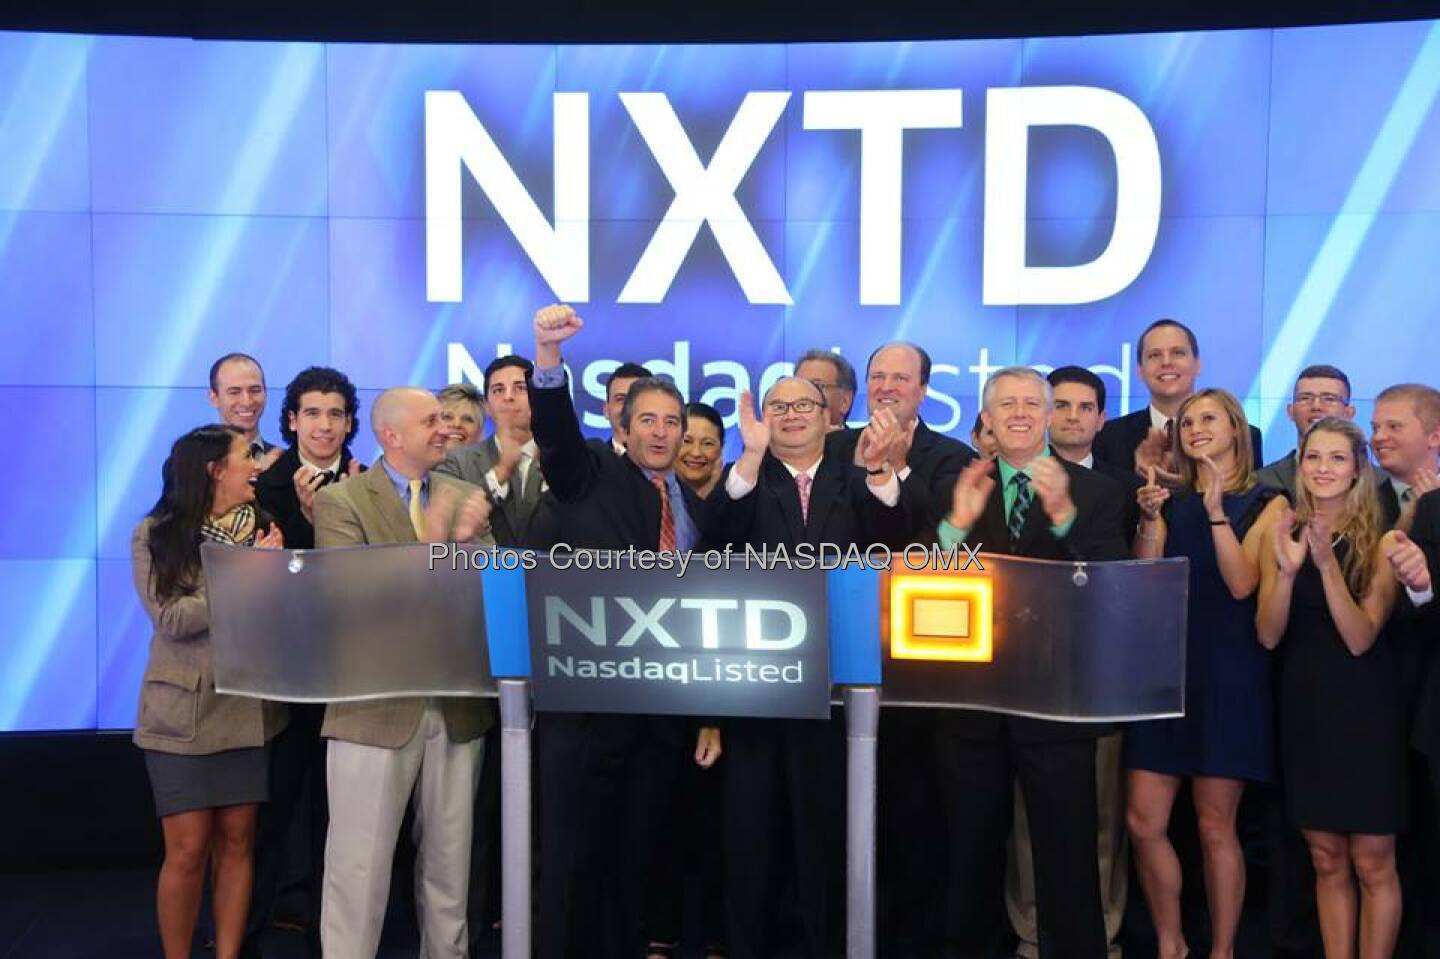 NXT-ID Inc ringing the NASDAQ Opening Bell in celebration of recent #IPO! $NXTD  Source: http://facebook.com/NASDAQ